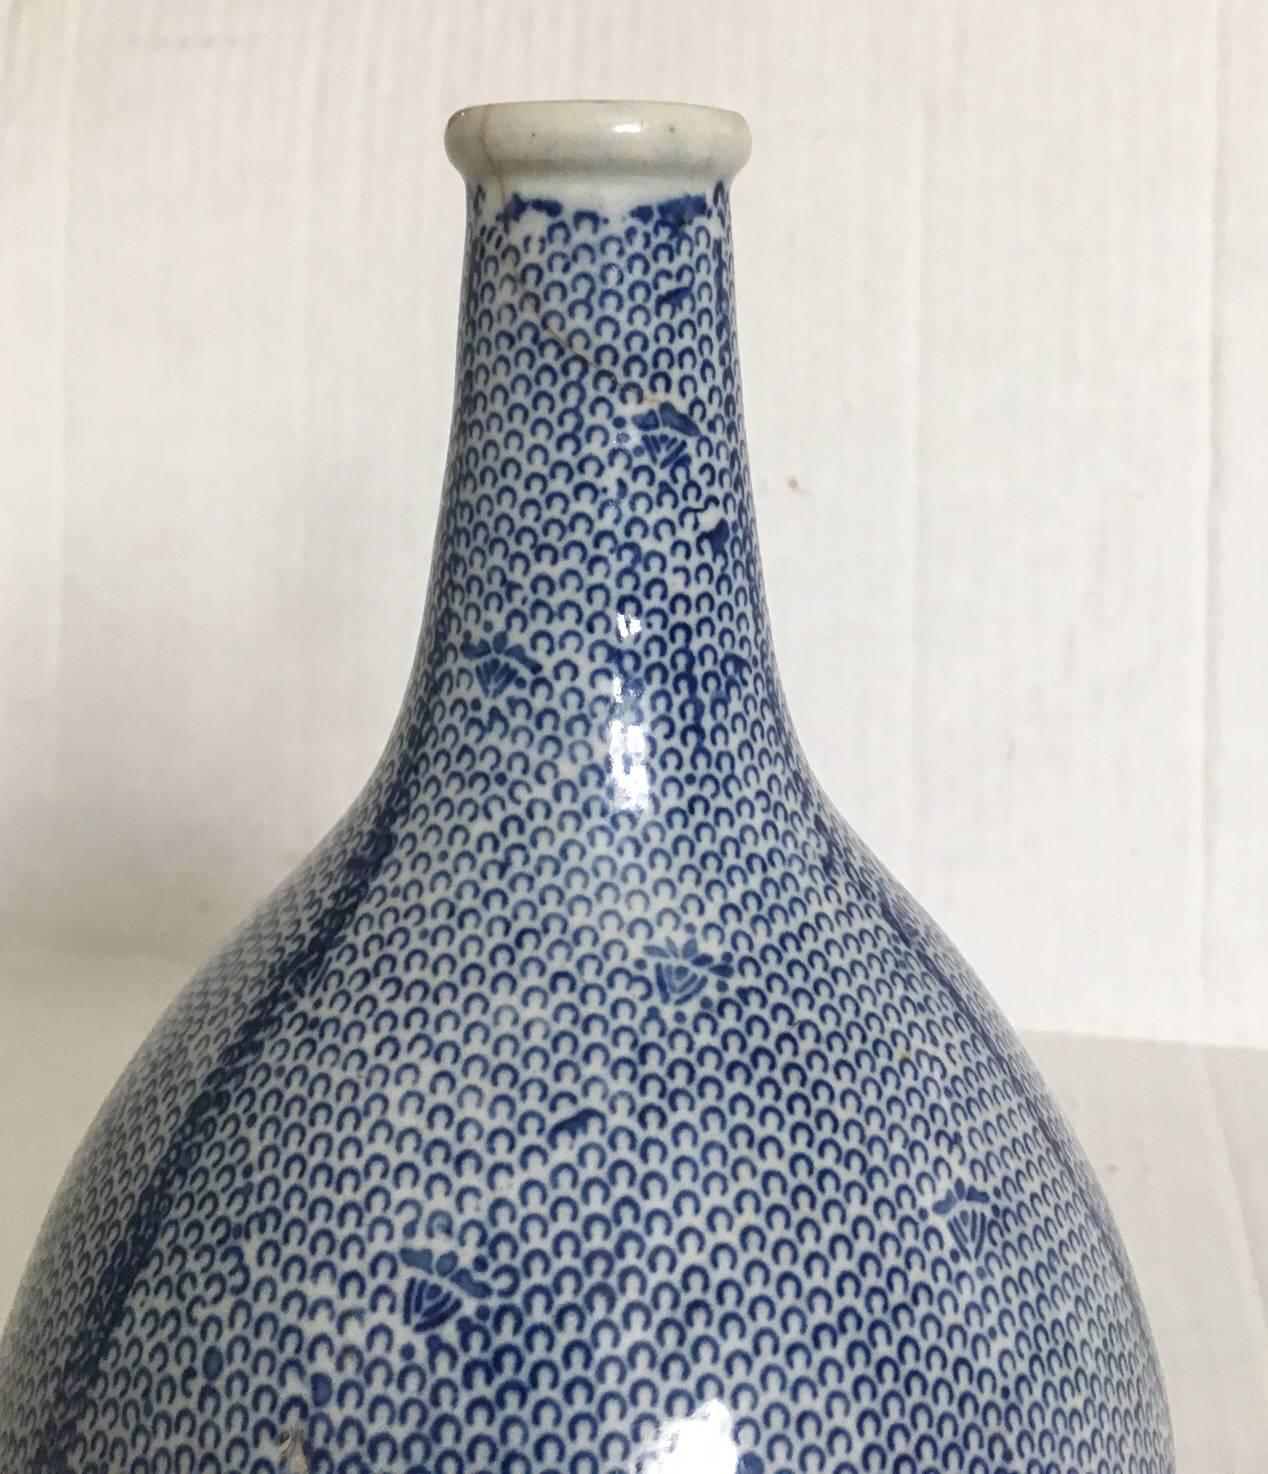 Japonisme 19th Century Antique Cobalt Blue and White Japanese Sake Bottle